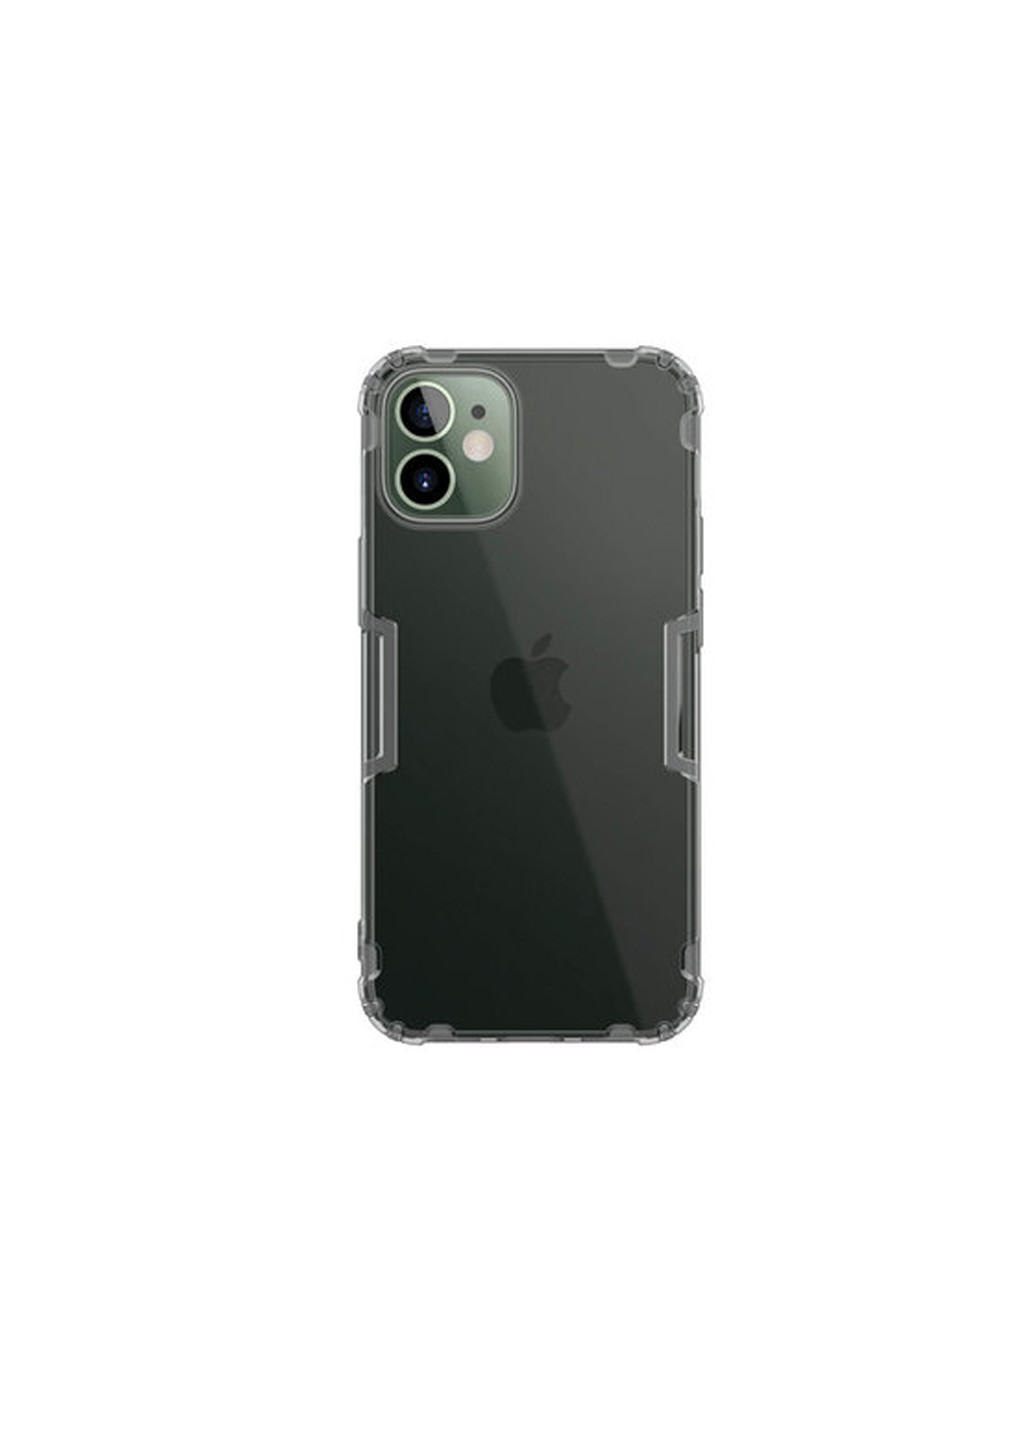 Чехол силиконовый Nature TPU Case для iPhone 12 Mini прозрачный серый Clear Gray Nillkin (220821032)